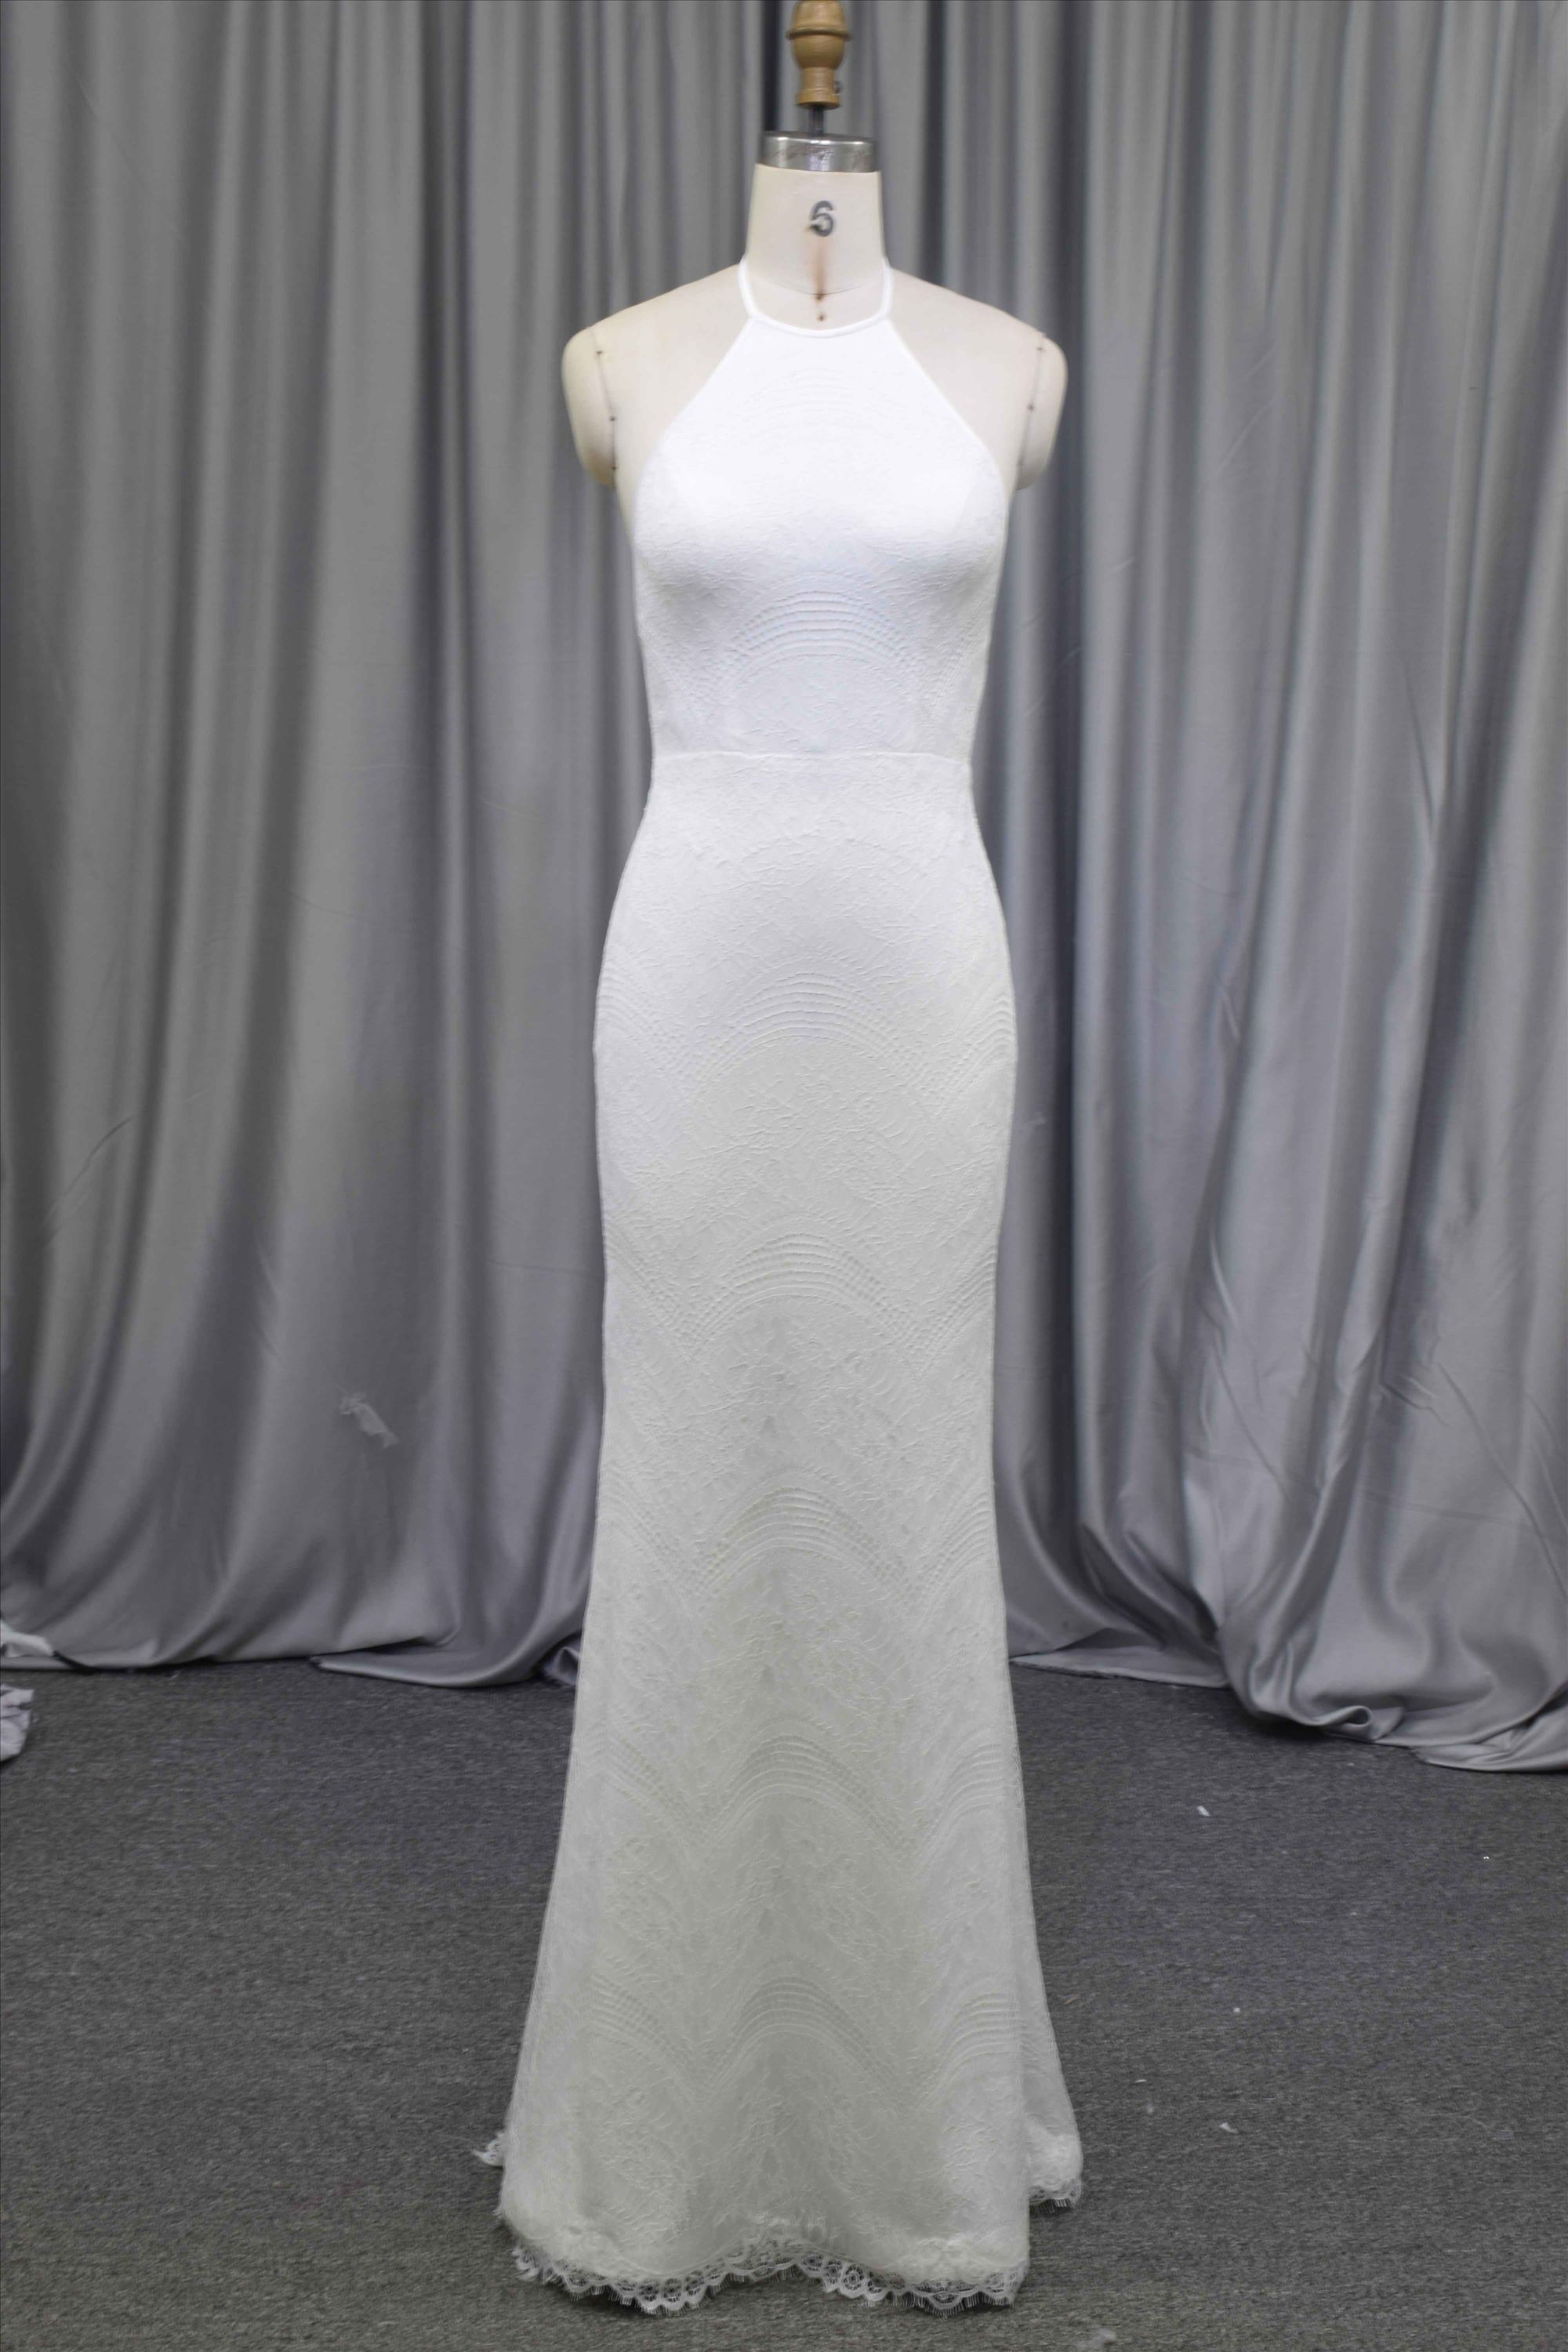 Boho backless wedding dress latest design bridal gown